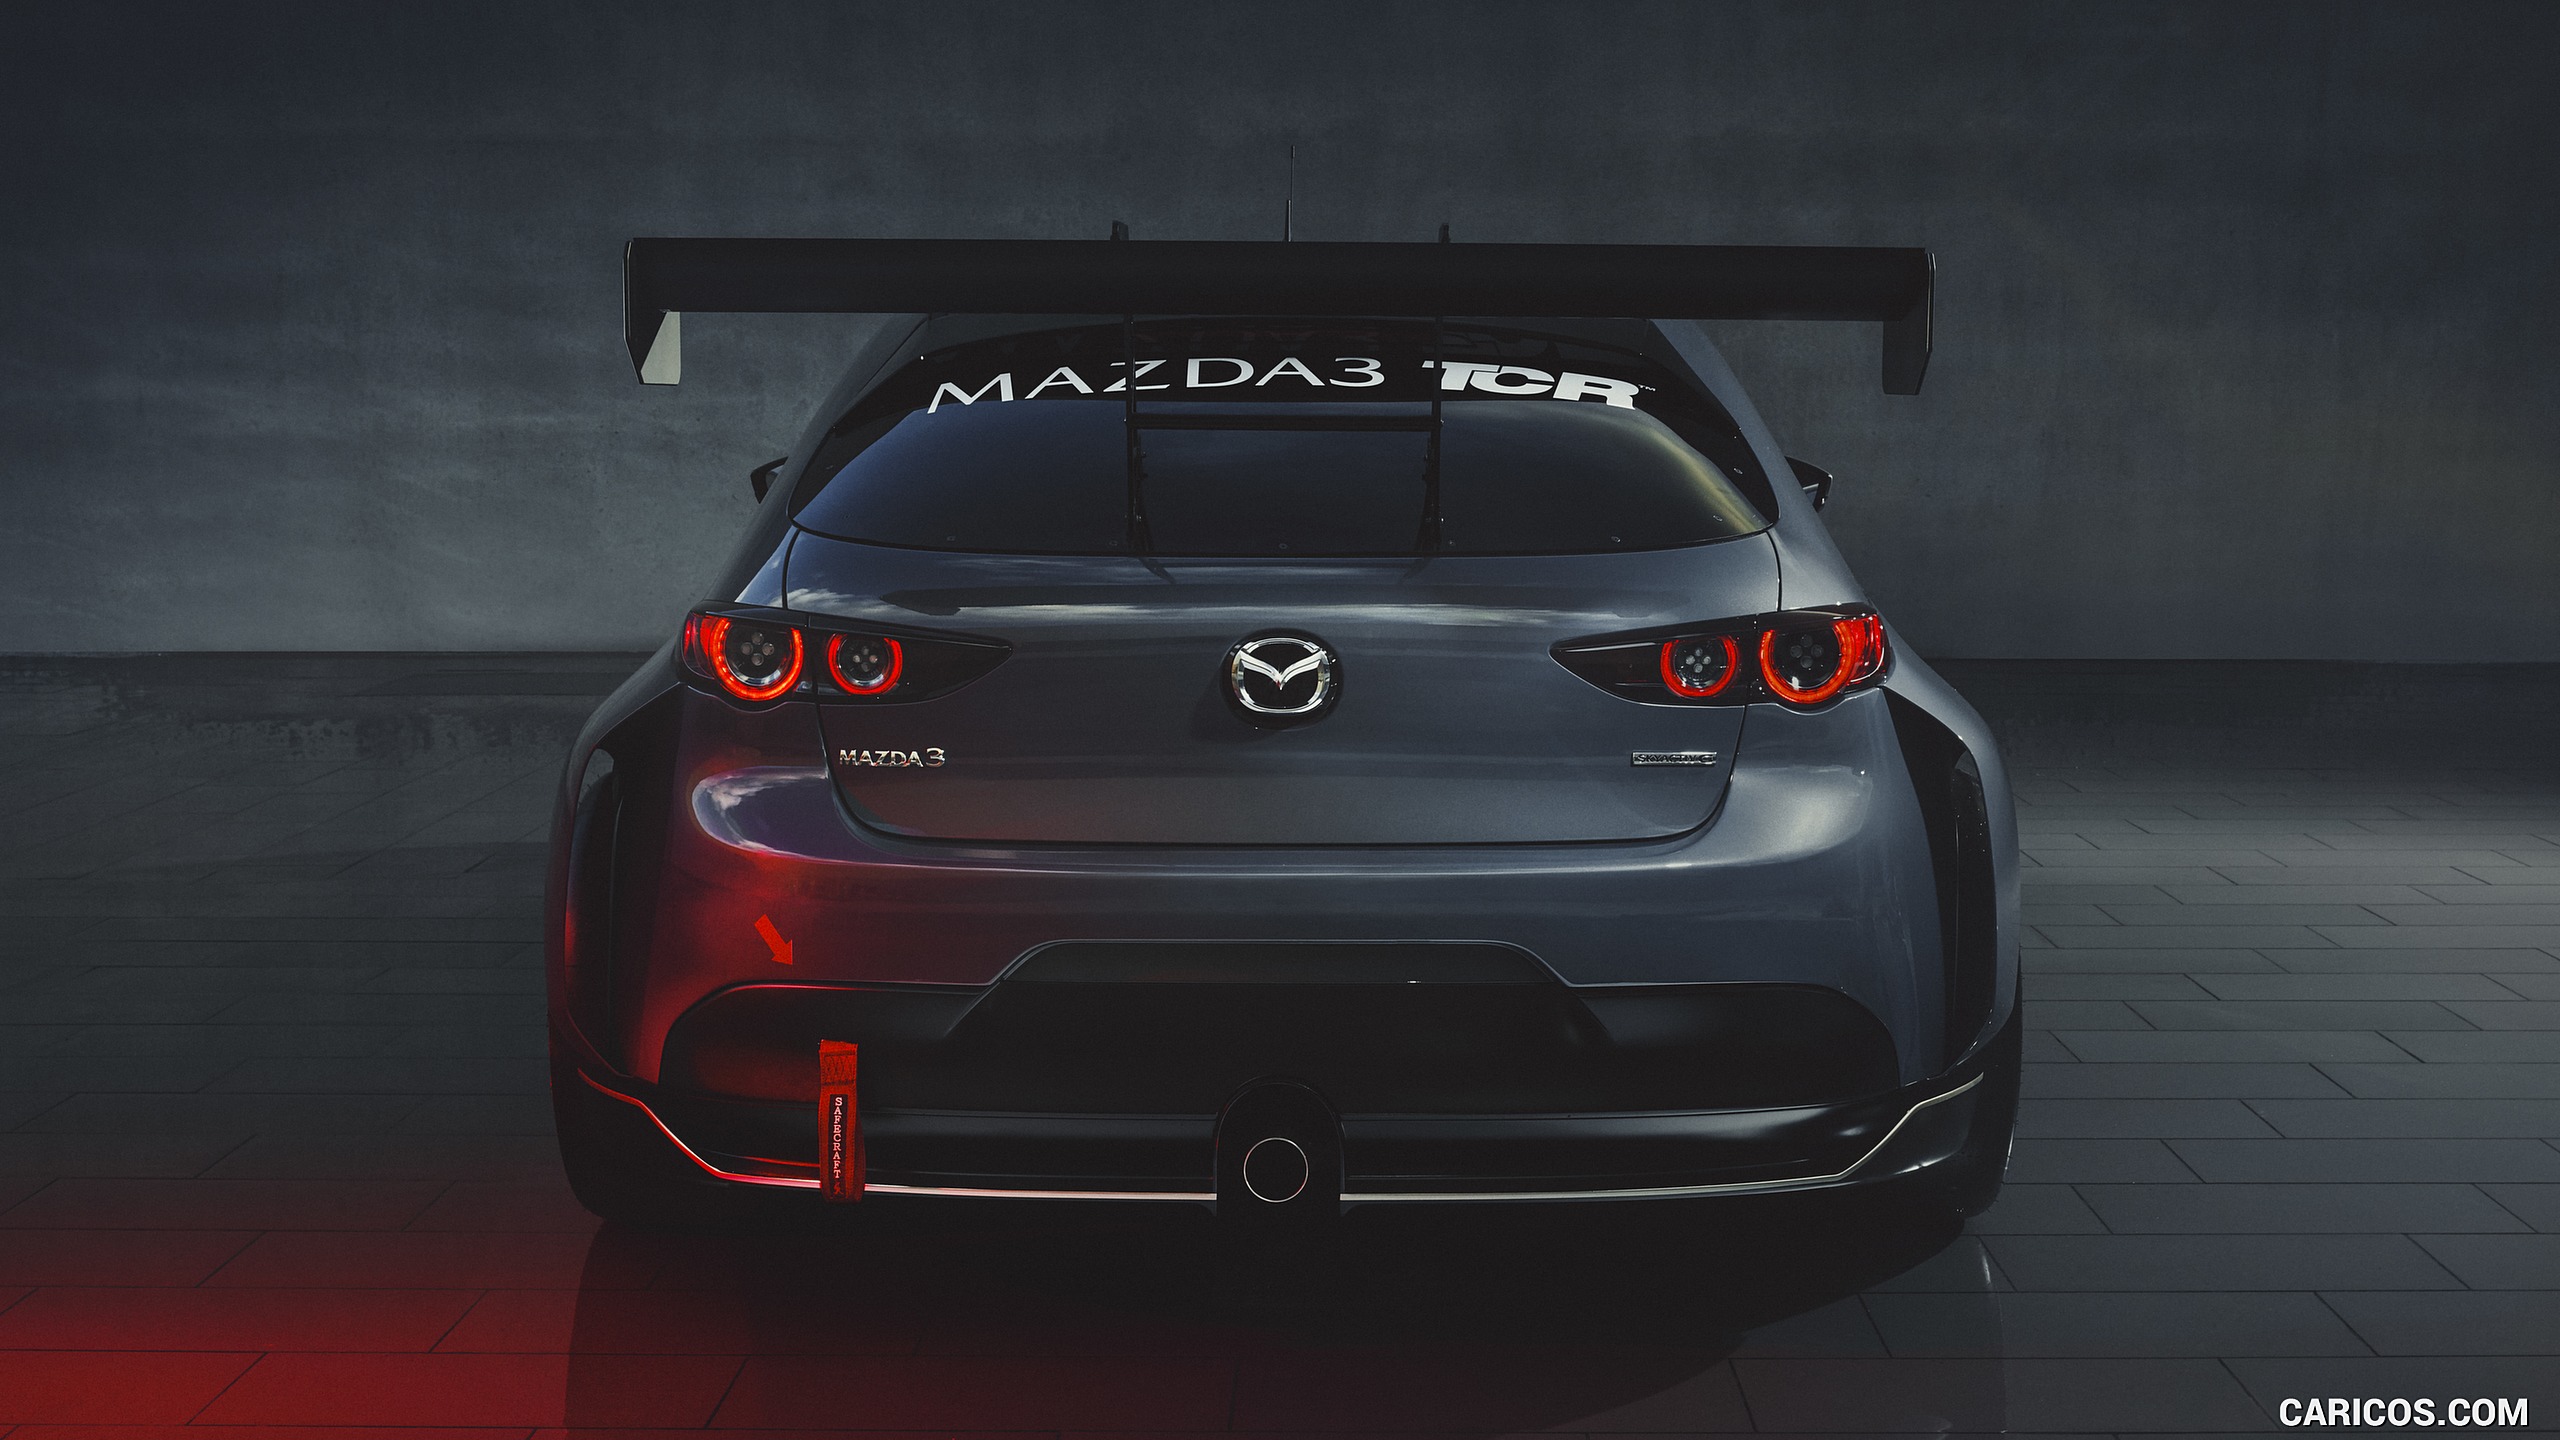 2020 Mazda3 TCR - Rear, #6 of 13